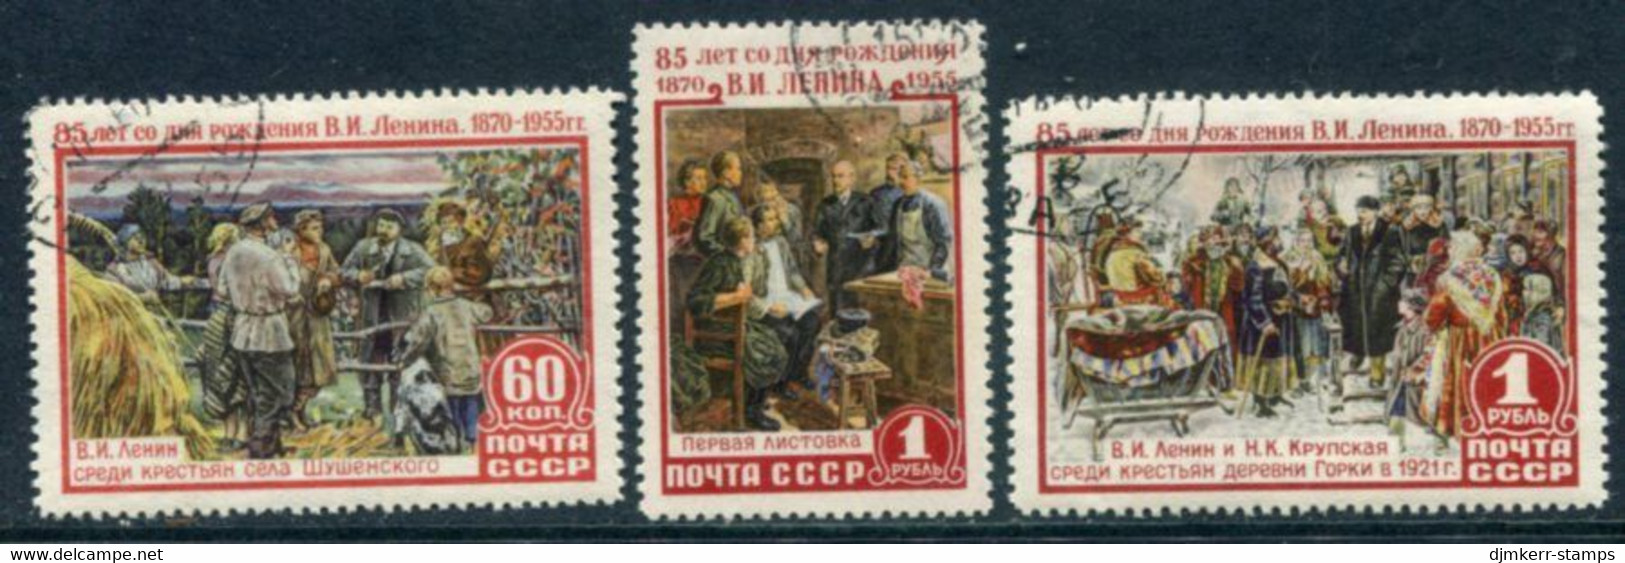 SOVIET UNION 1955 Lenin Birth Anniversary Used.  Michel 1756-58 - Usati